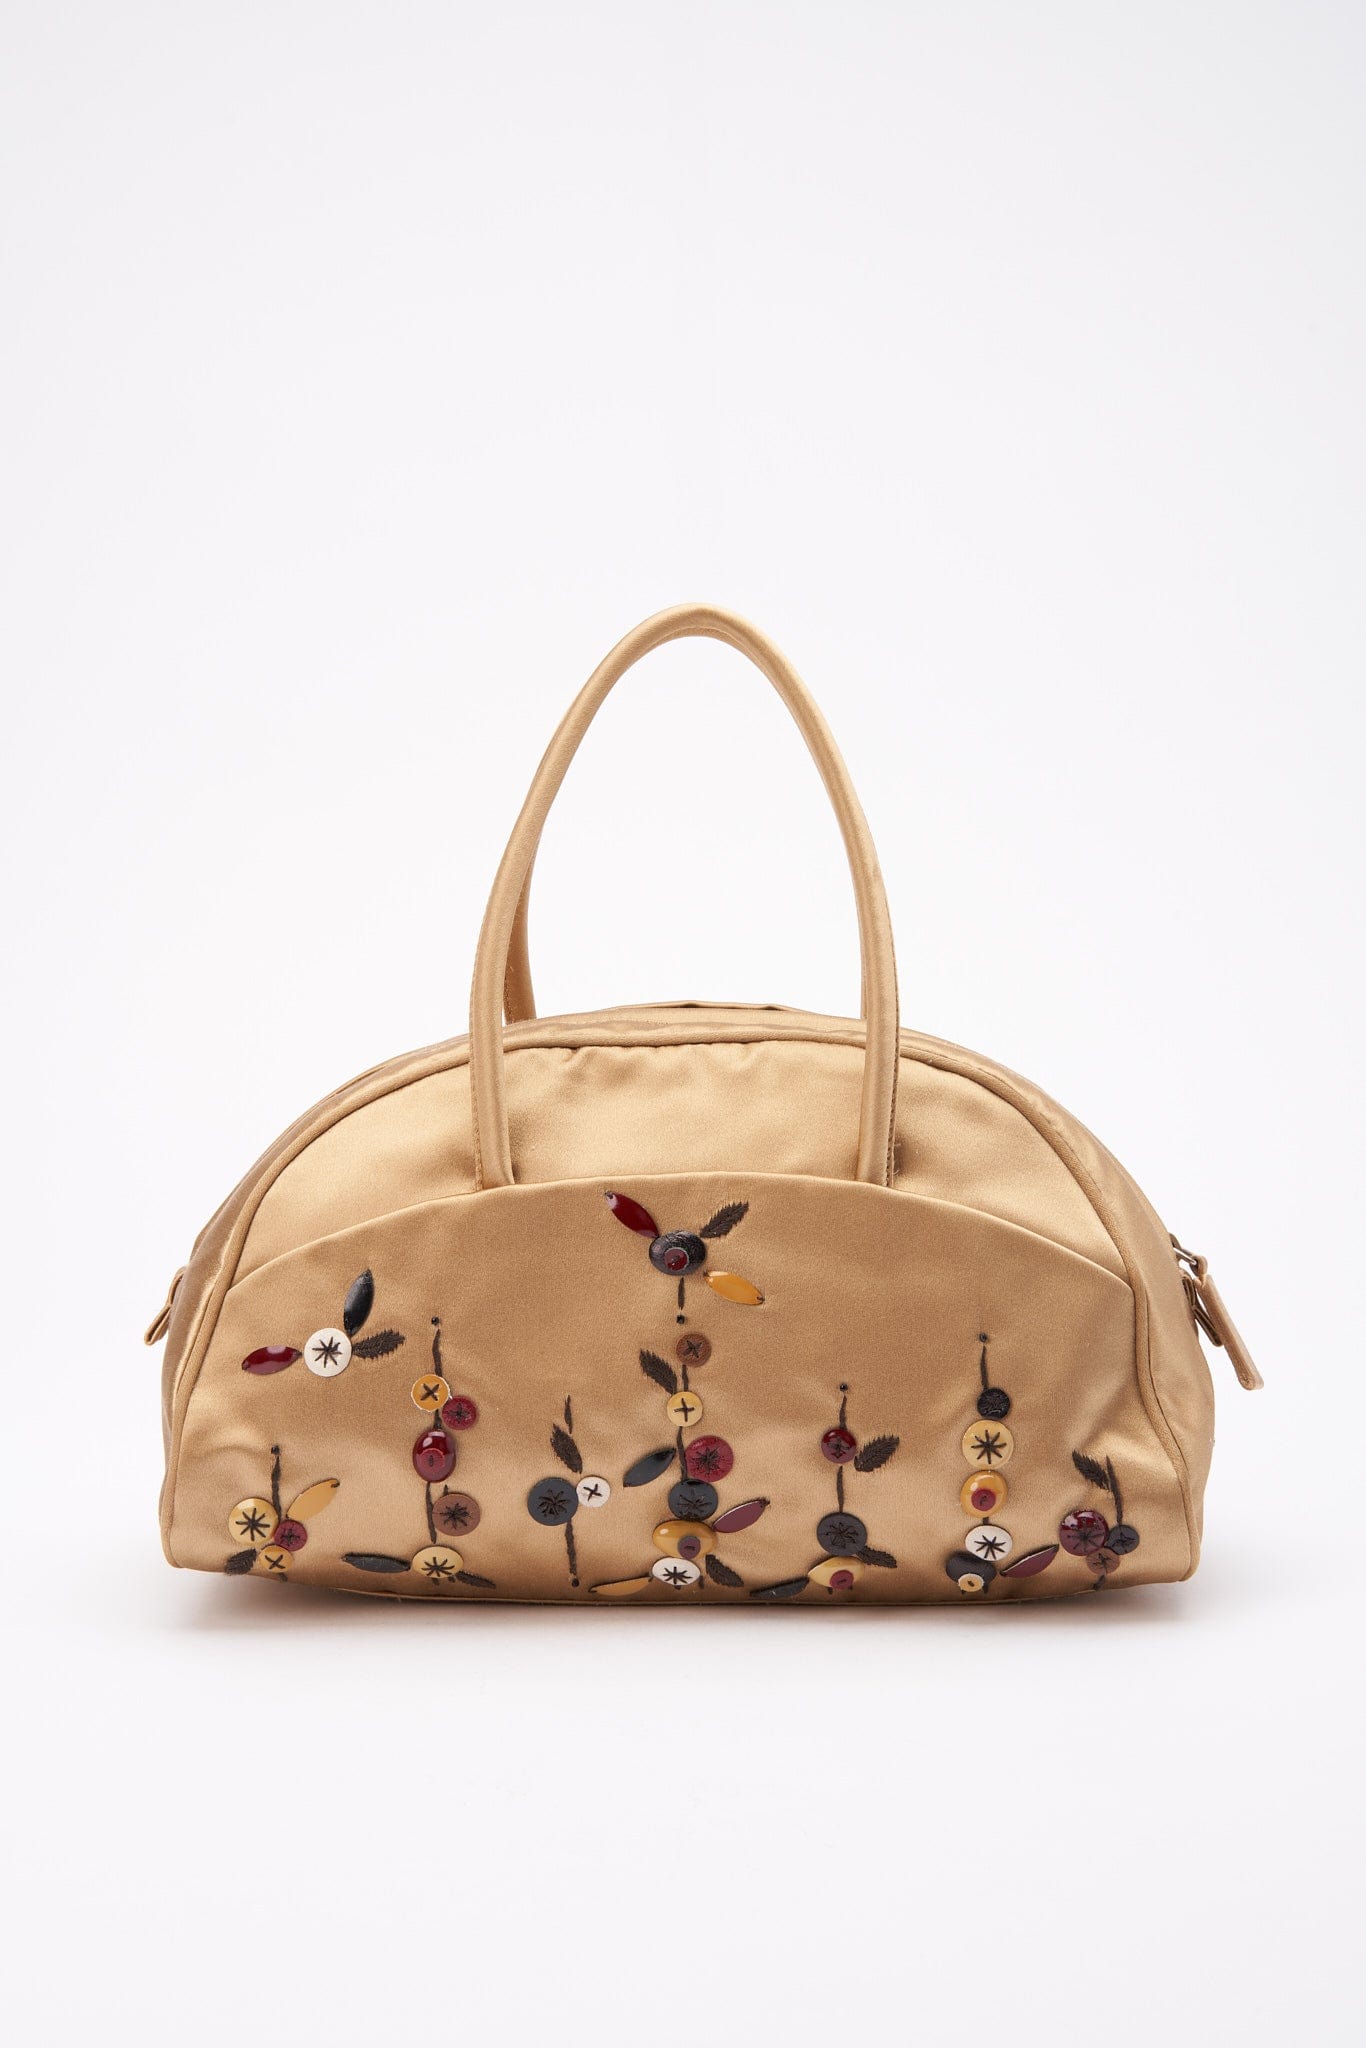 Vintage Prada Satin Bag With Embroidery Flowers